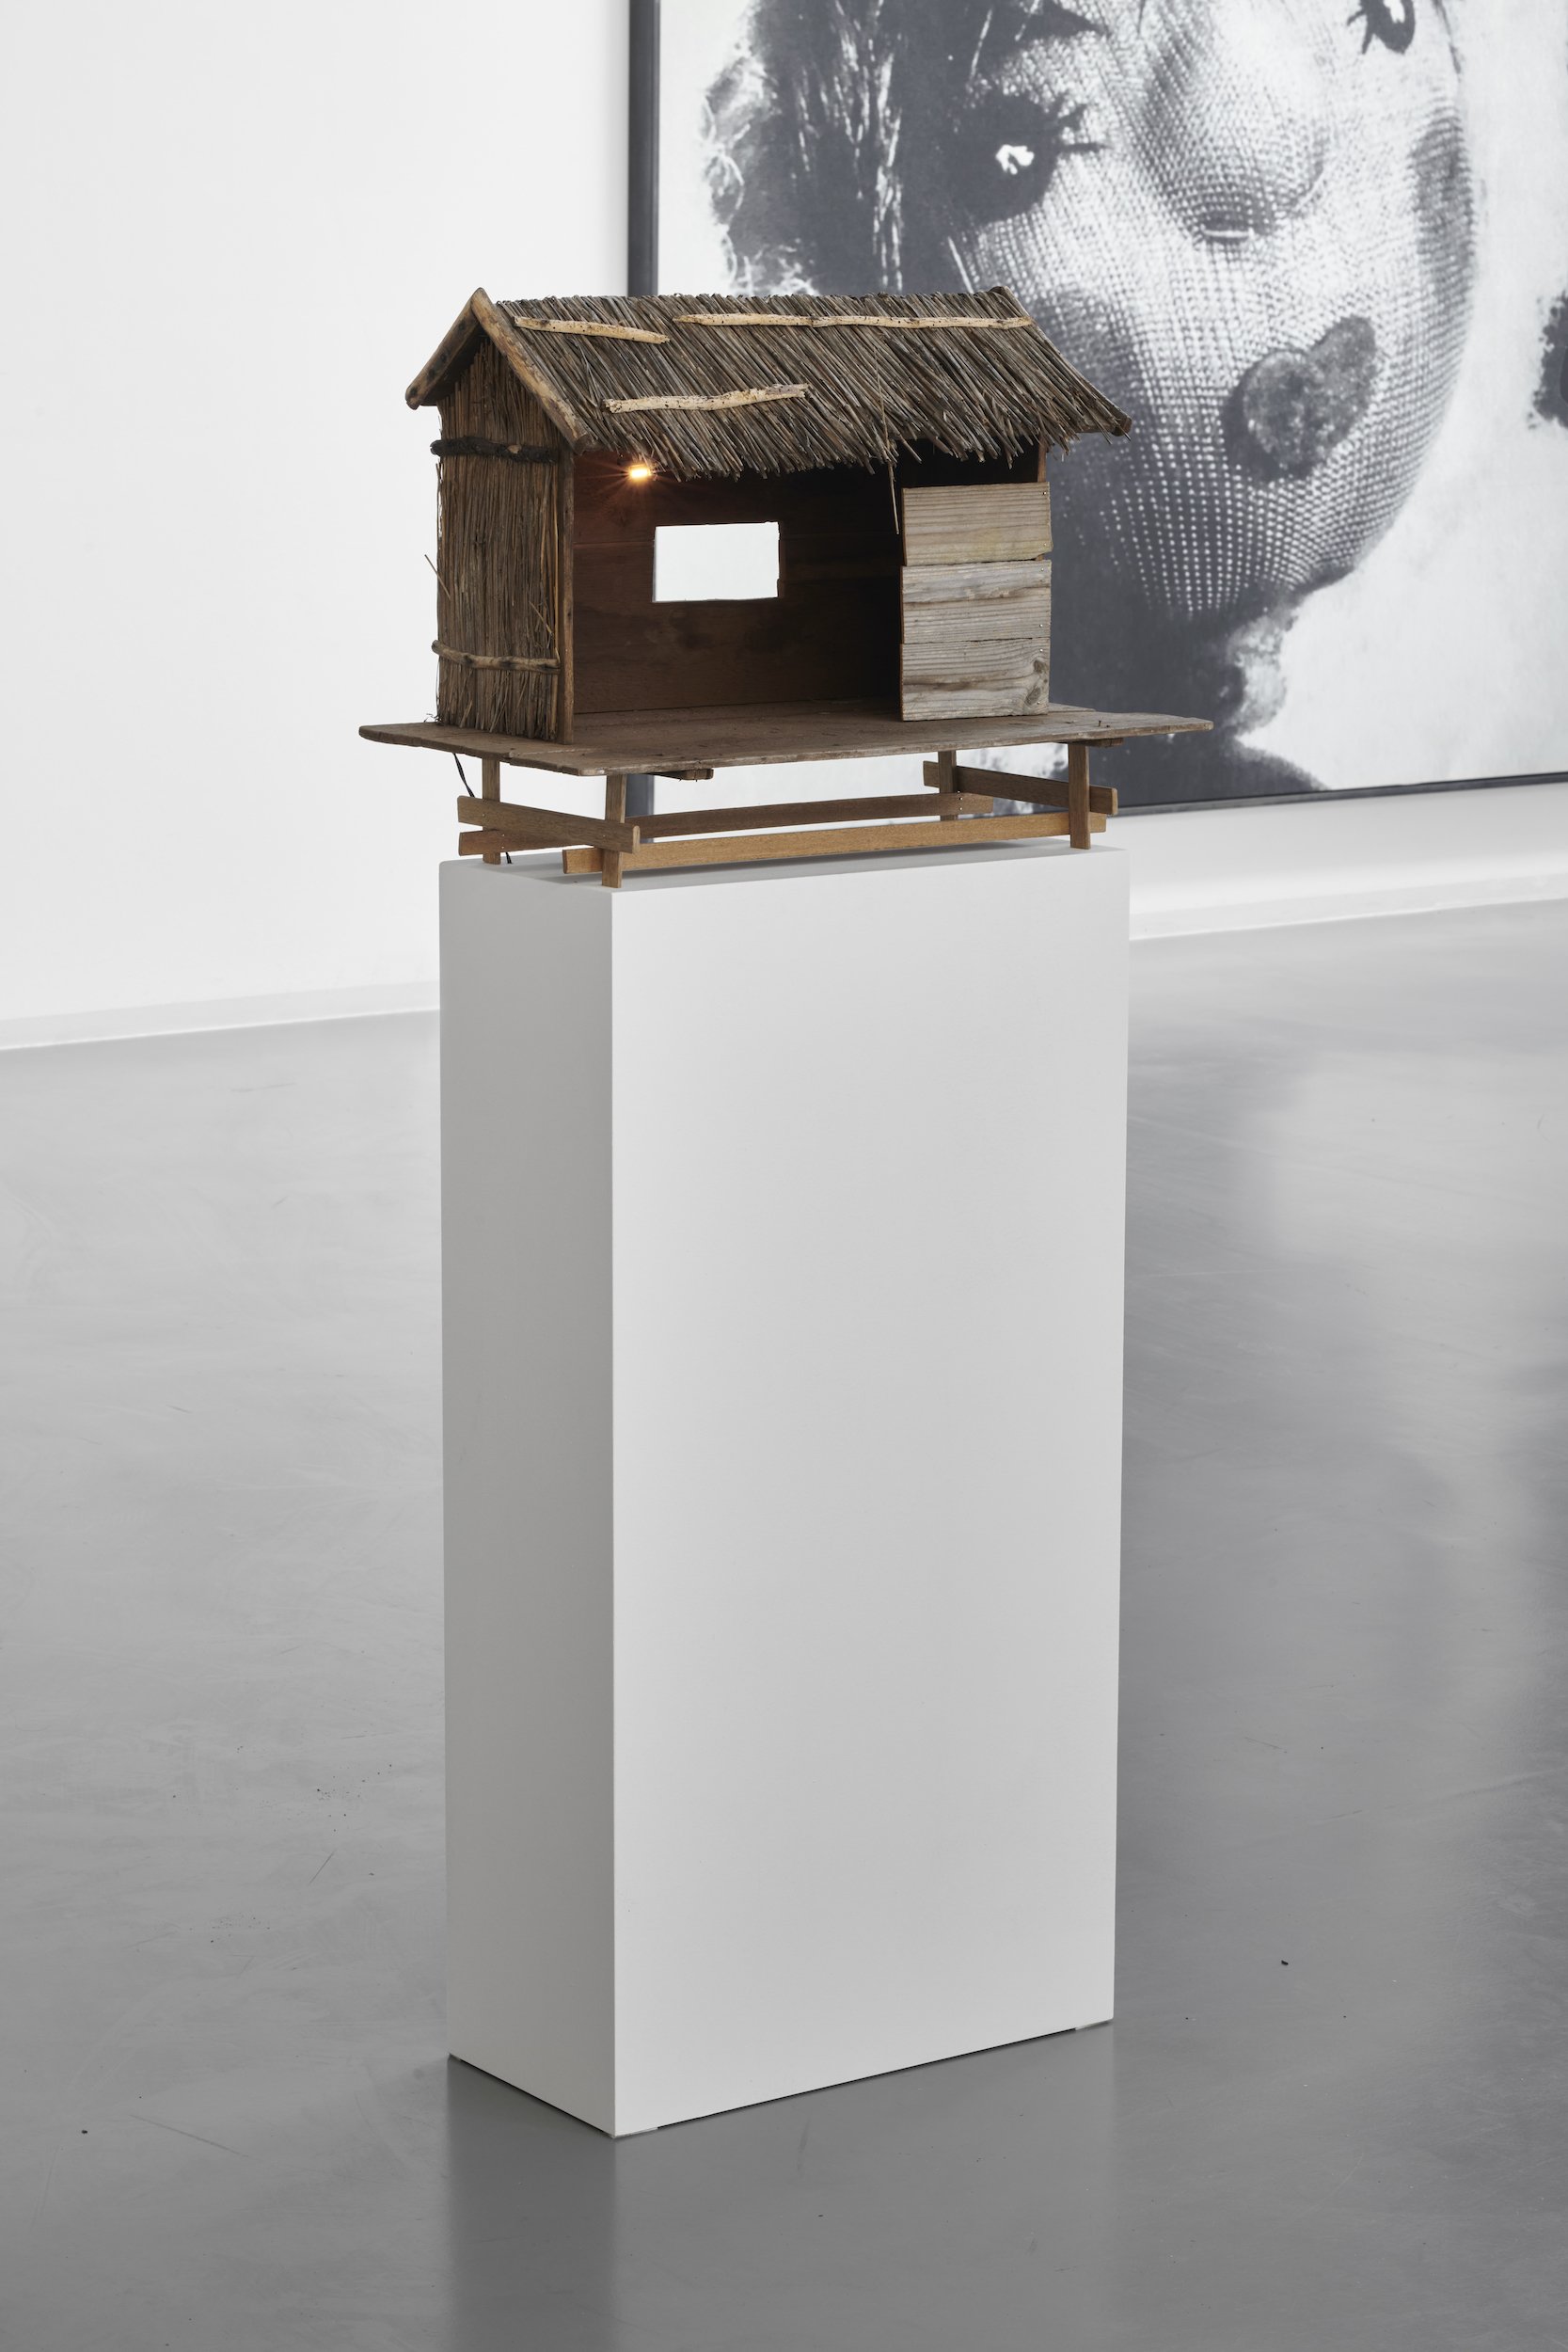 Michael Kleine, Hütte, 2015. Installation view: The Holding Environment, Chapter II, Bonner Kunstverein, 2021. Photo: Mareike Tocha. Courtesy the artist.